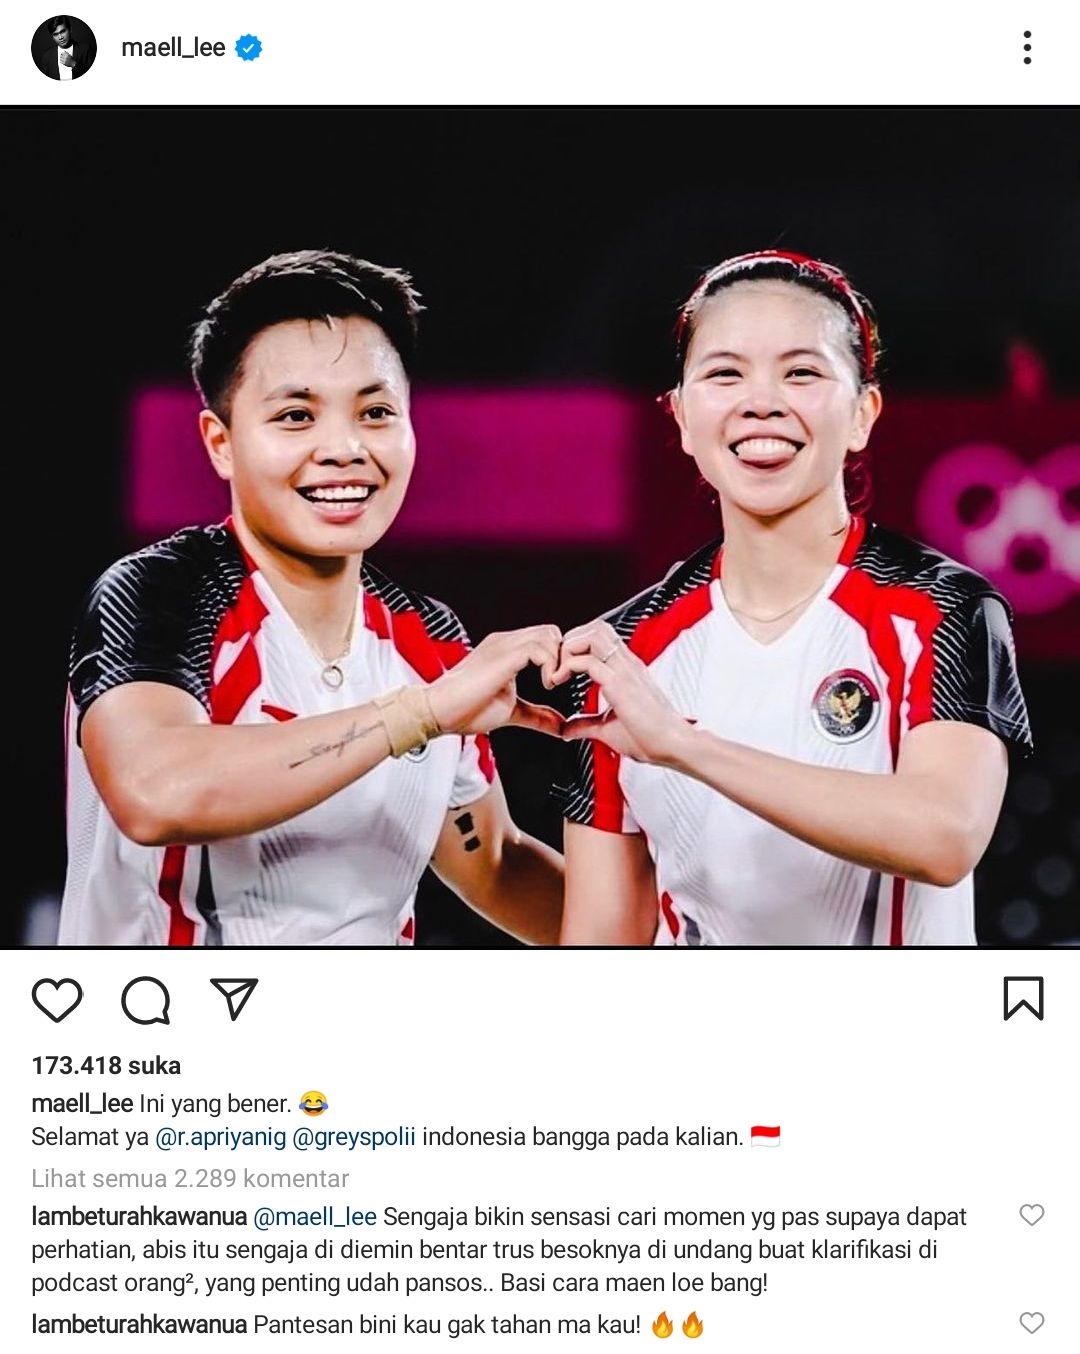 Unggah Foto Editan Greysia Polii, Netizen 'Serbu' Akun Instagram Maell Lee: Mereka Sumbang Medali Emas, Anda?